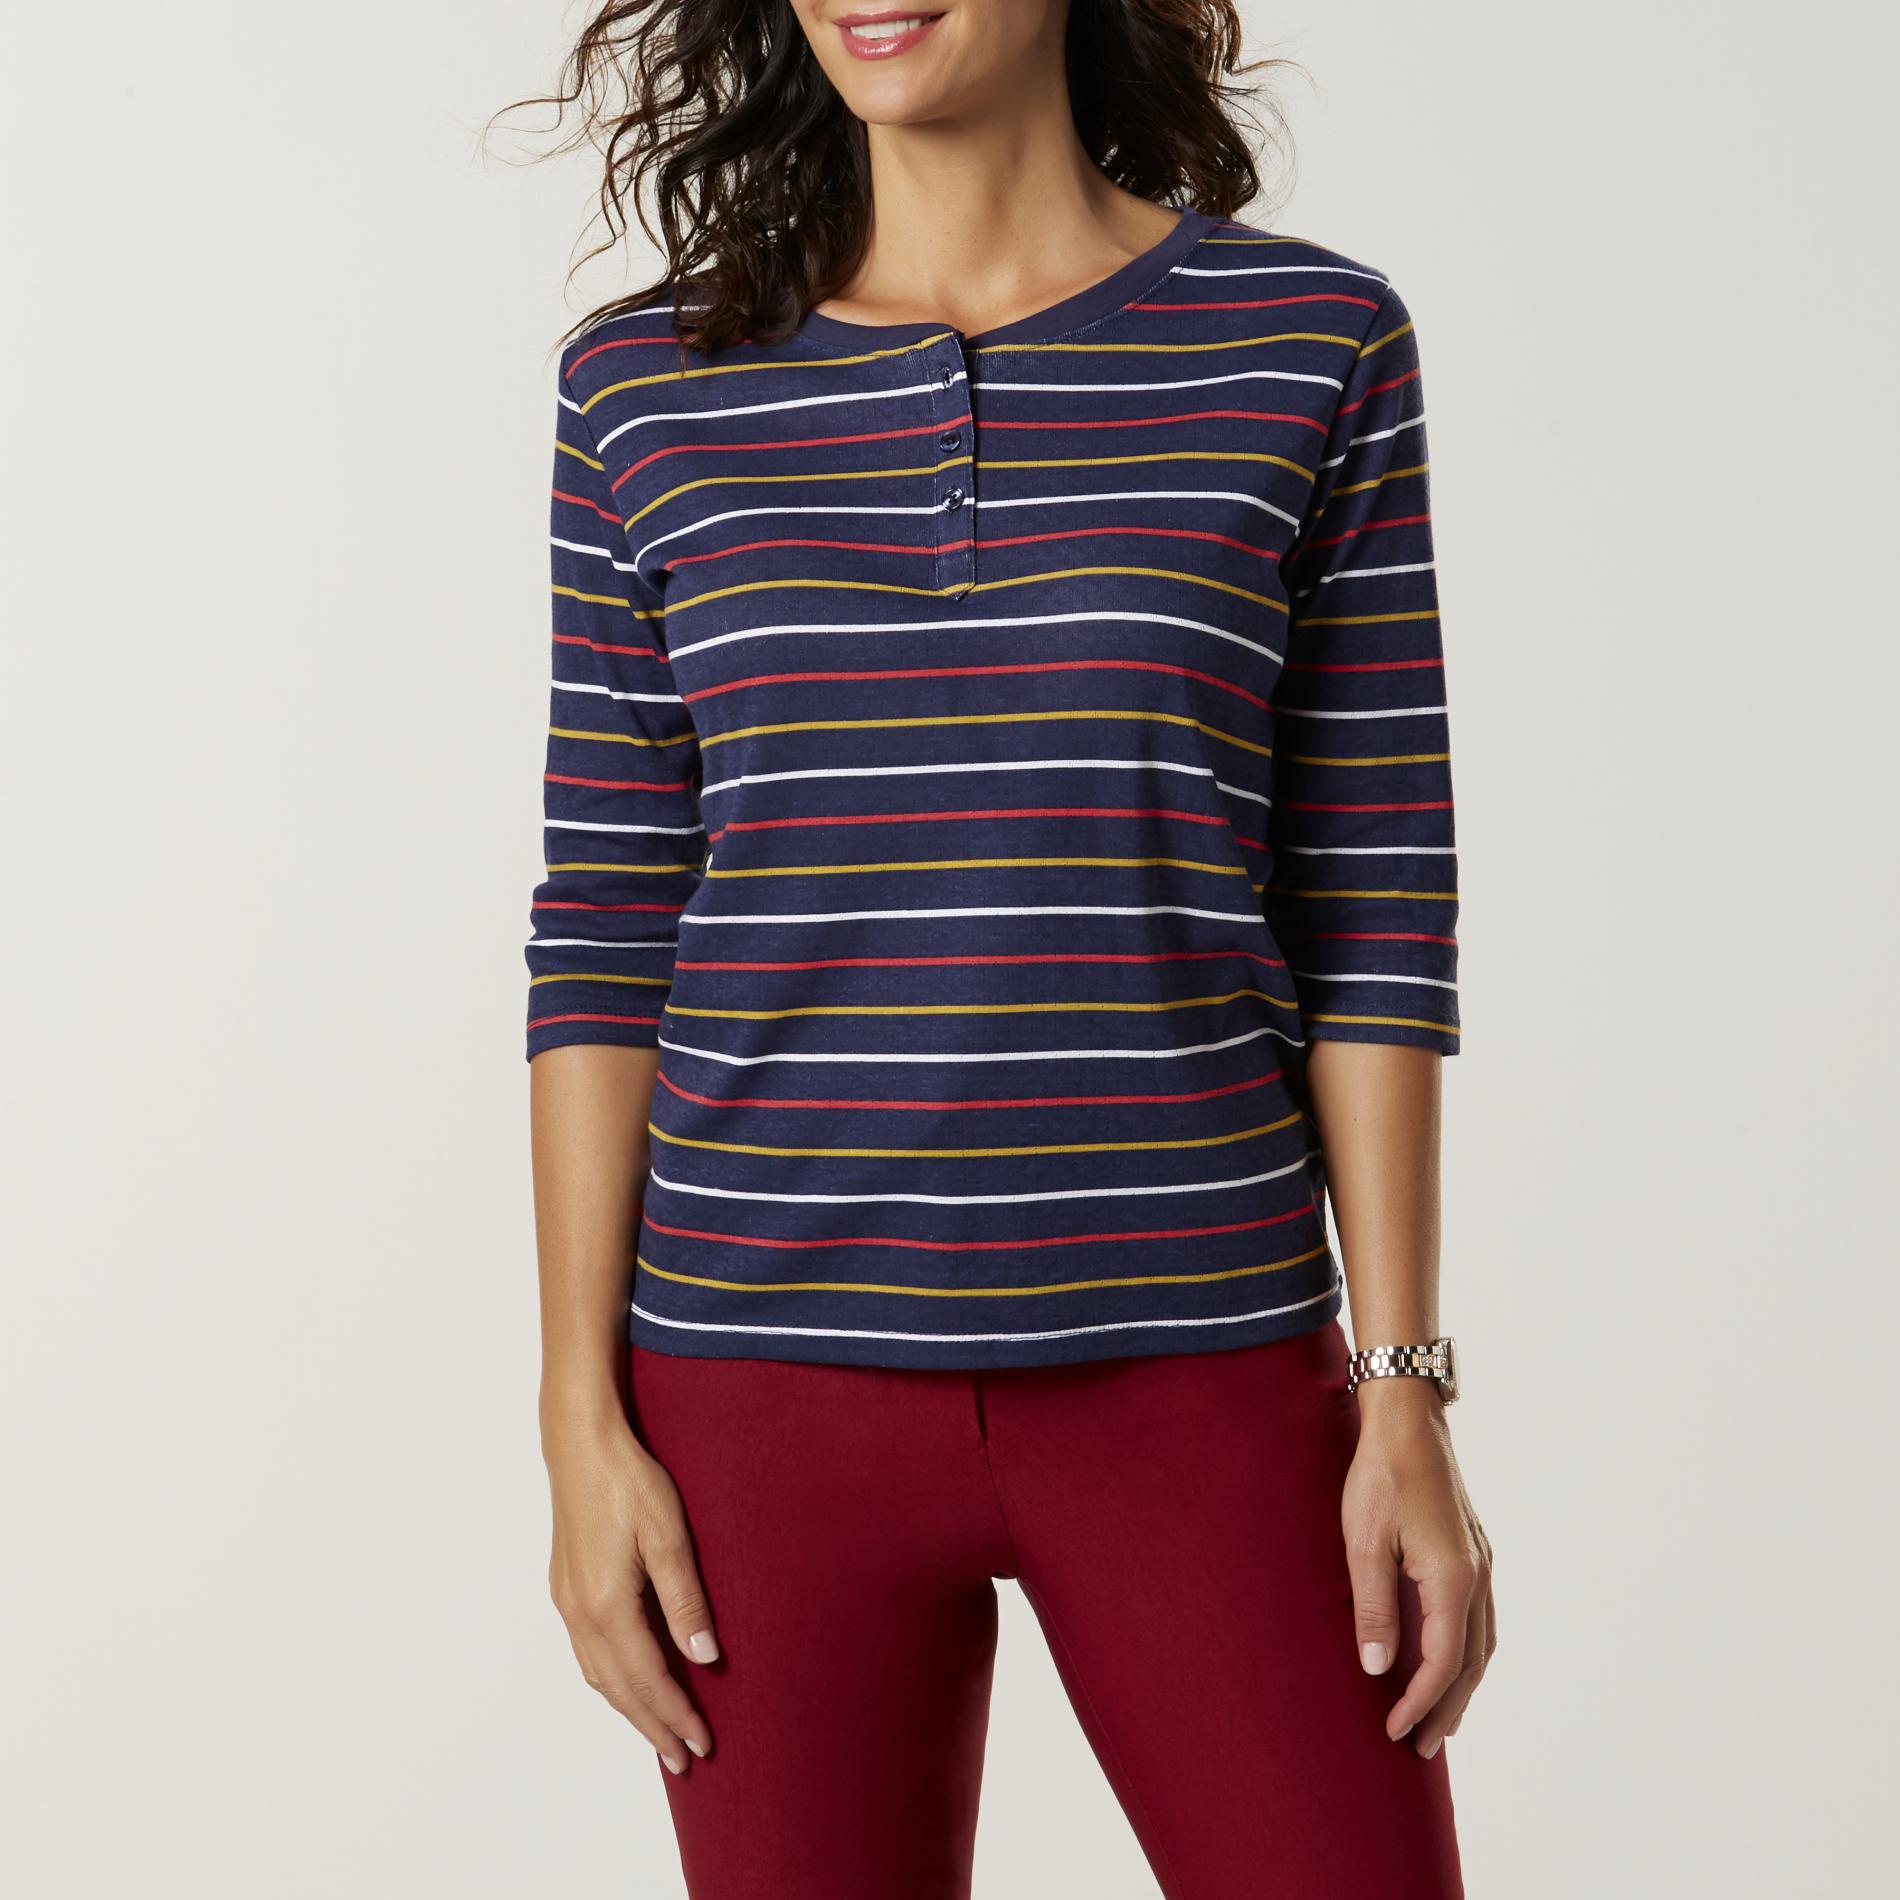 Basic Editions Women's Henley Shirt - Striped